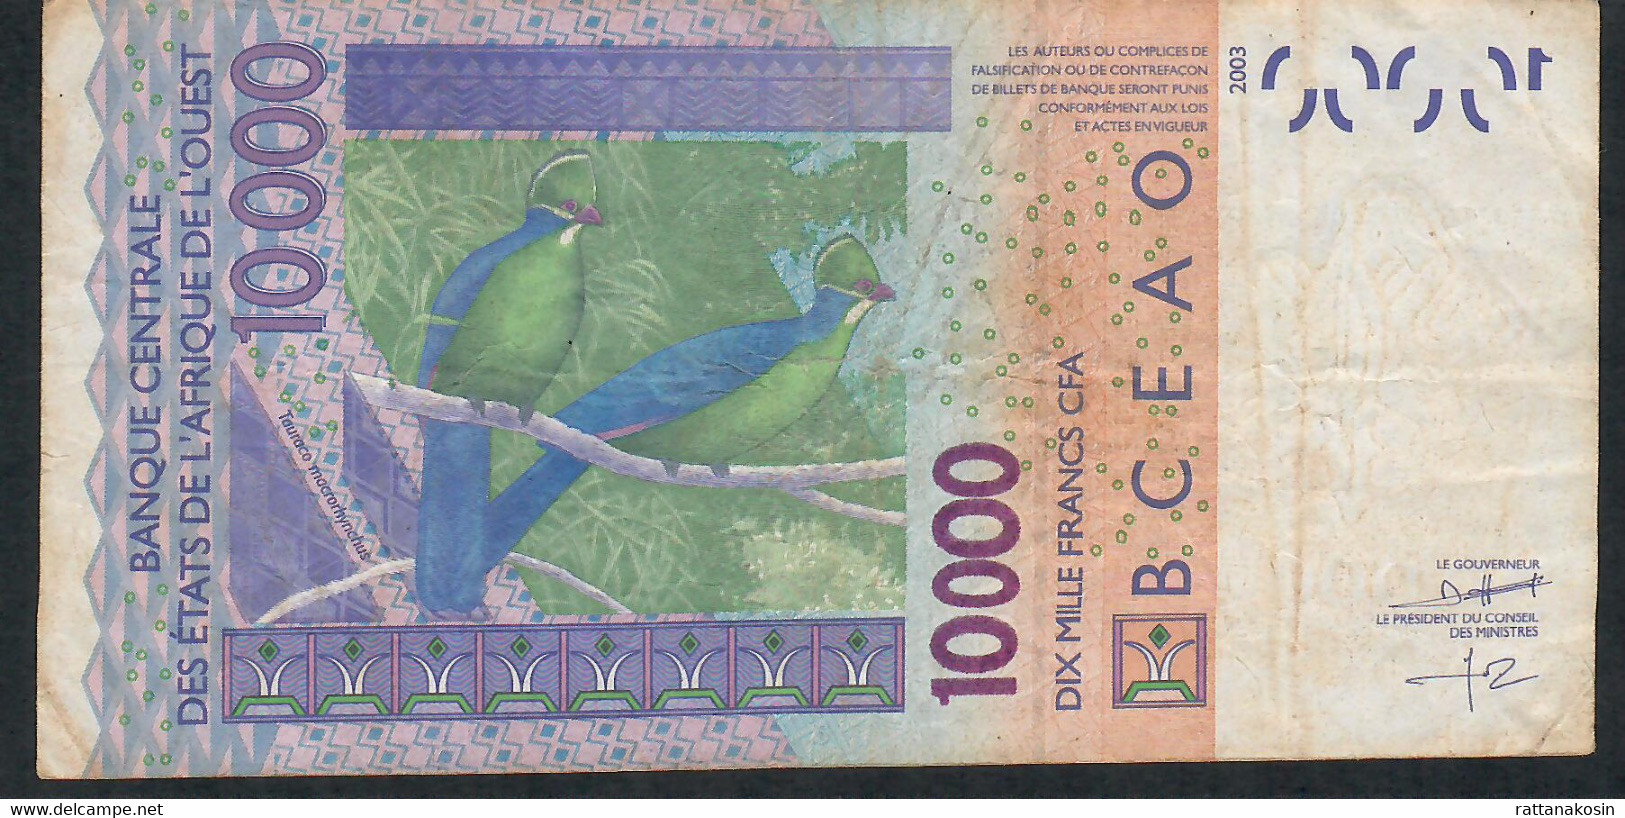 W.A.S. Burkina Faso P318Ci 10000 Francs (20)10. VF No Tear,no P.h. - Burkina Faso